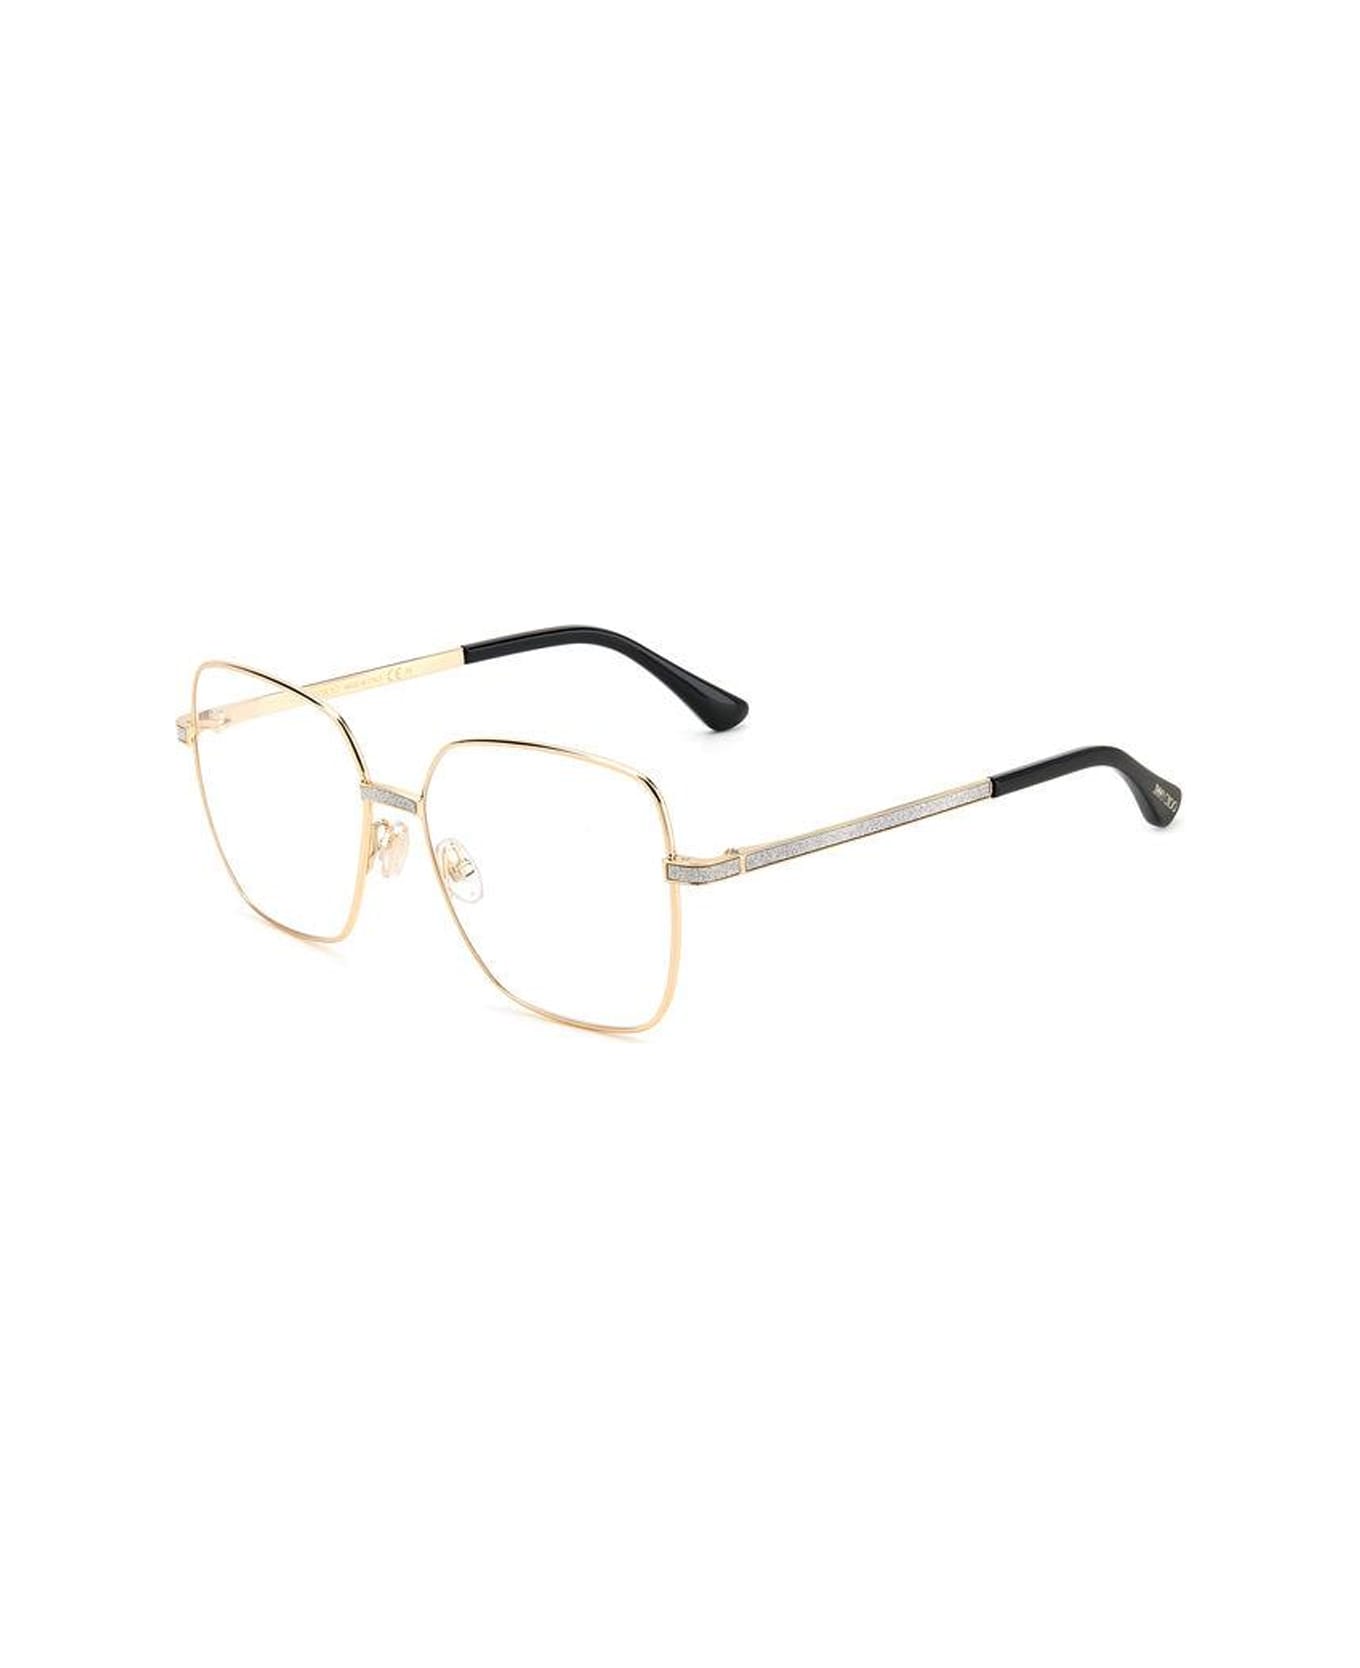 Jimmy Choo Eyewear Jc354 2m2/15 Glasses - Oro